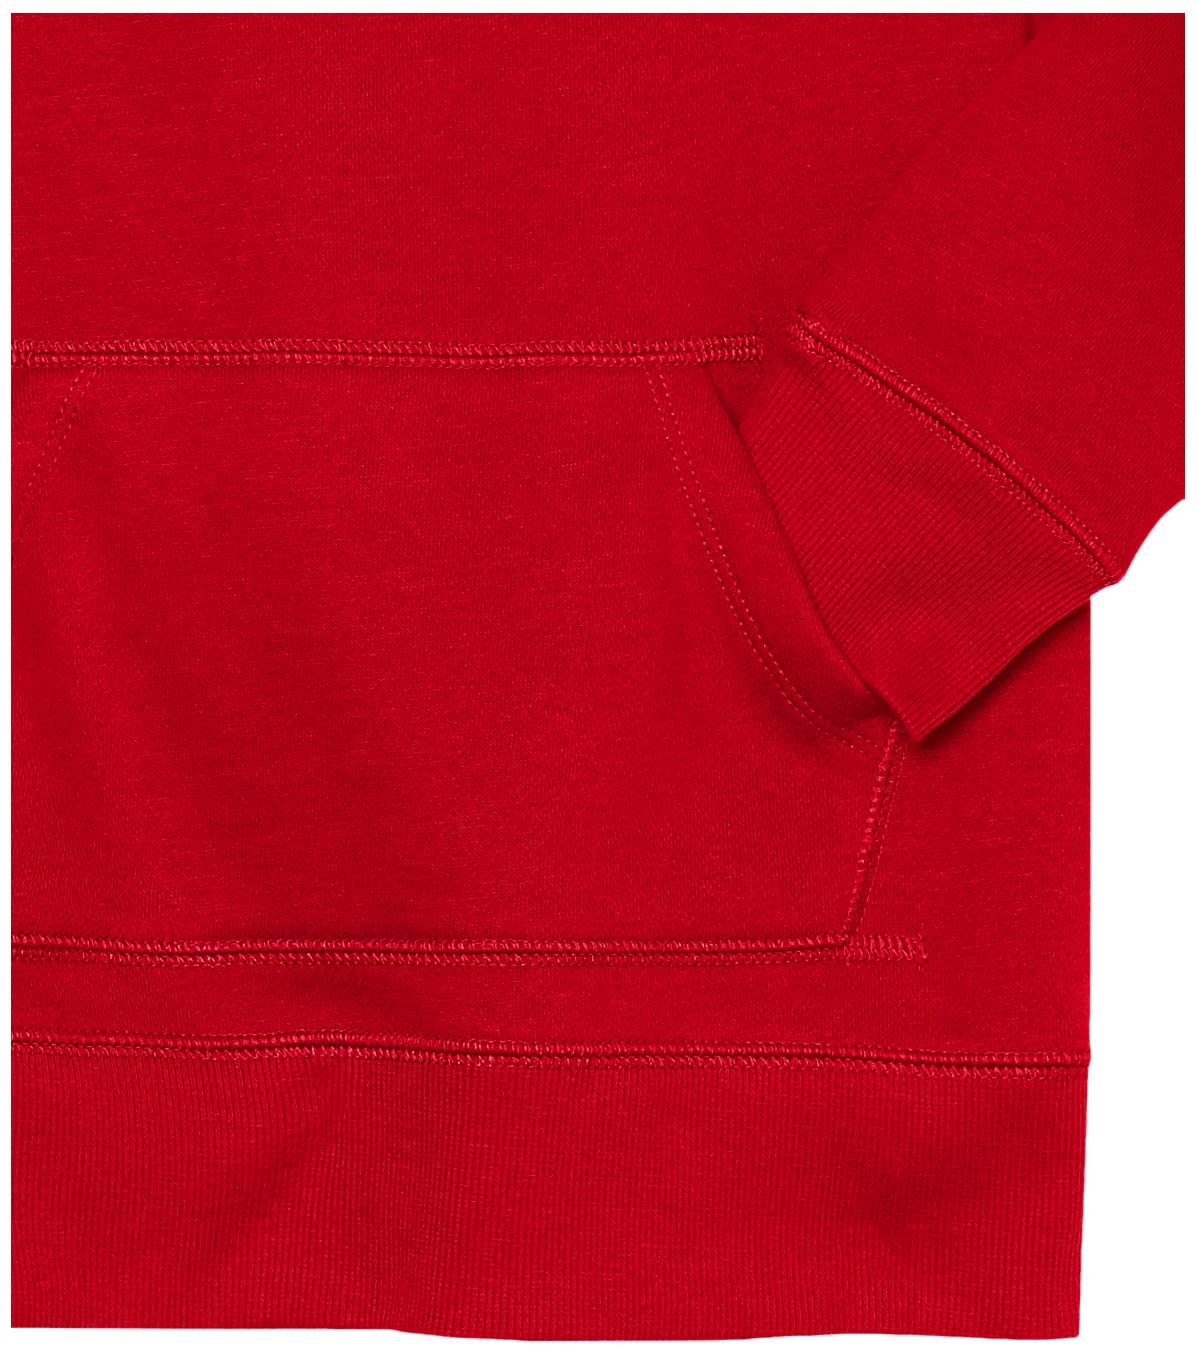 Amazon Essentials Girls and Toddlers' Pullover Hoodie Sweatshirt